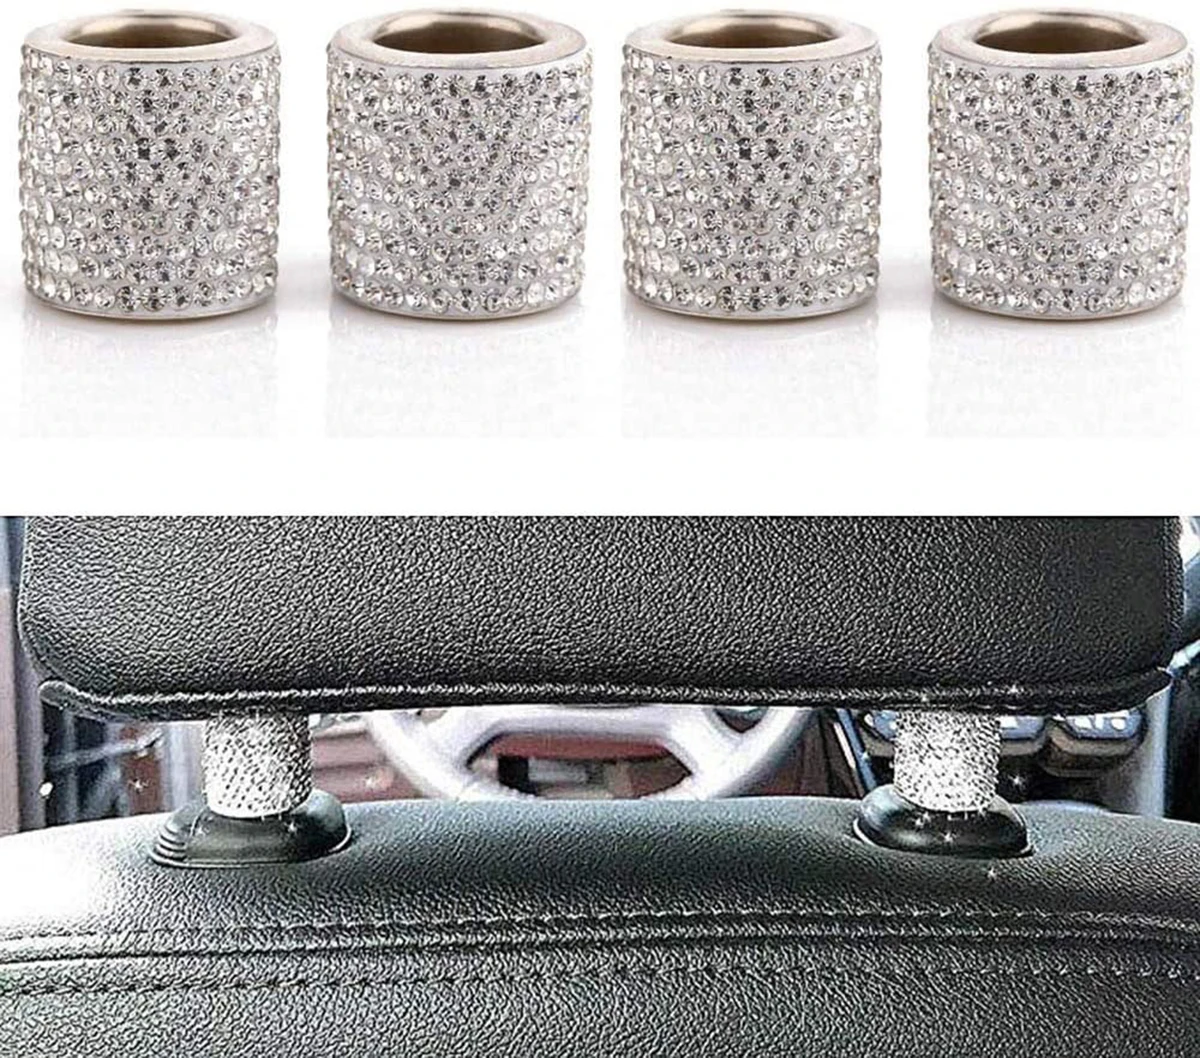 

4 Pcs Car Headrest Collars Car Head Rest Collars Rings Decor Bling Bling Crystal Diamond Ice for SUV Truck Interior Decoration